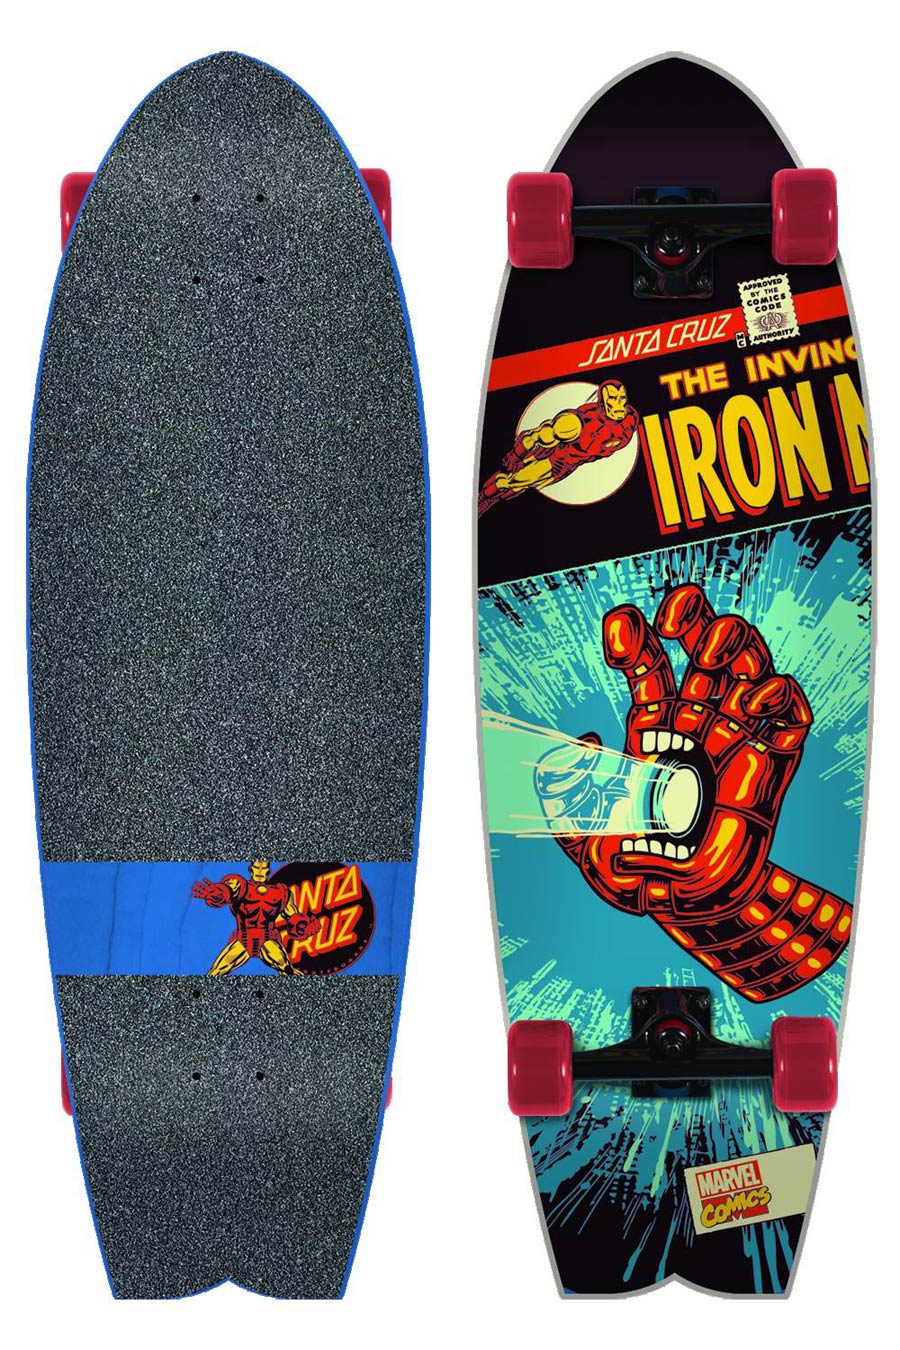 Marvel Hand Cruzer Skateboard - Iron Man Screaming Hand